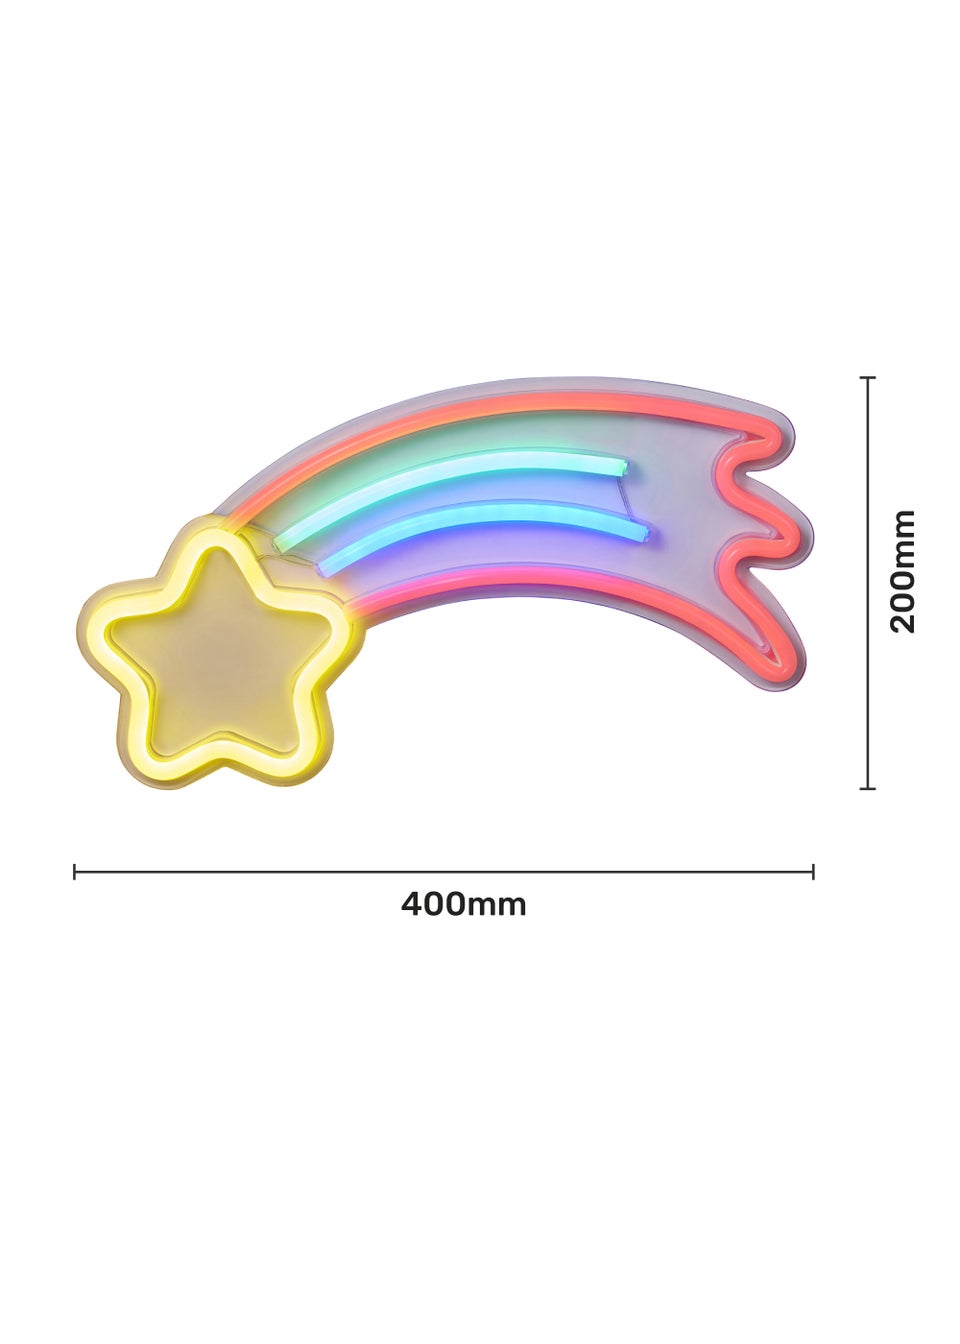 Glow Shooting Star Neon Light (20cm x 40.5cm x 2cm)